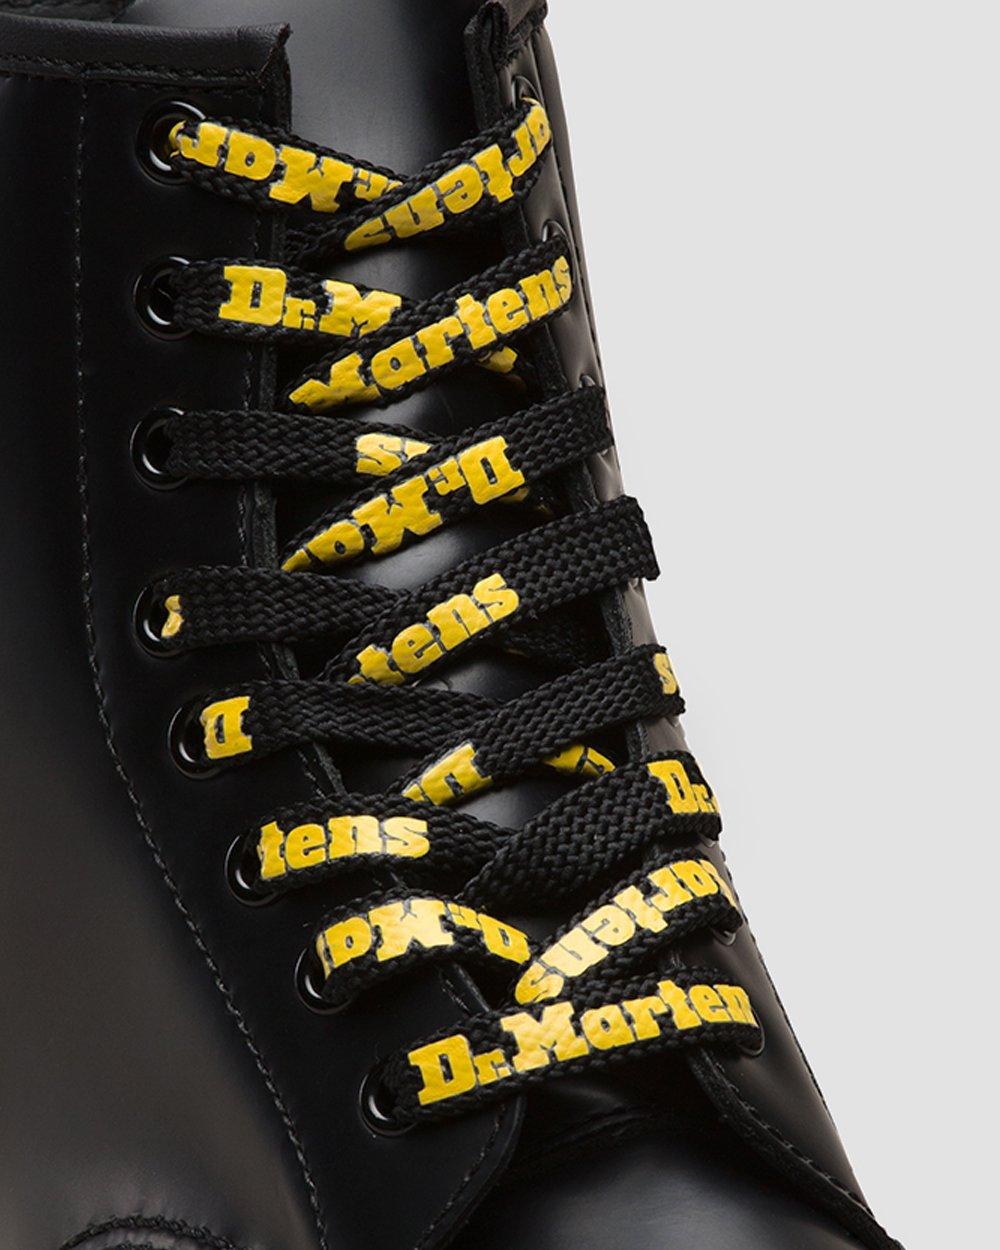 140cm Flat Shoe Laces (8-10 Eye) in Black+Yellow